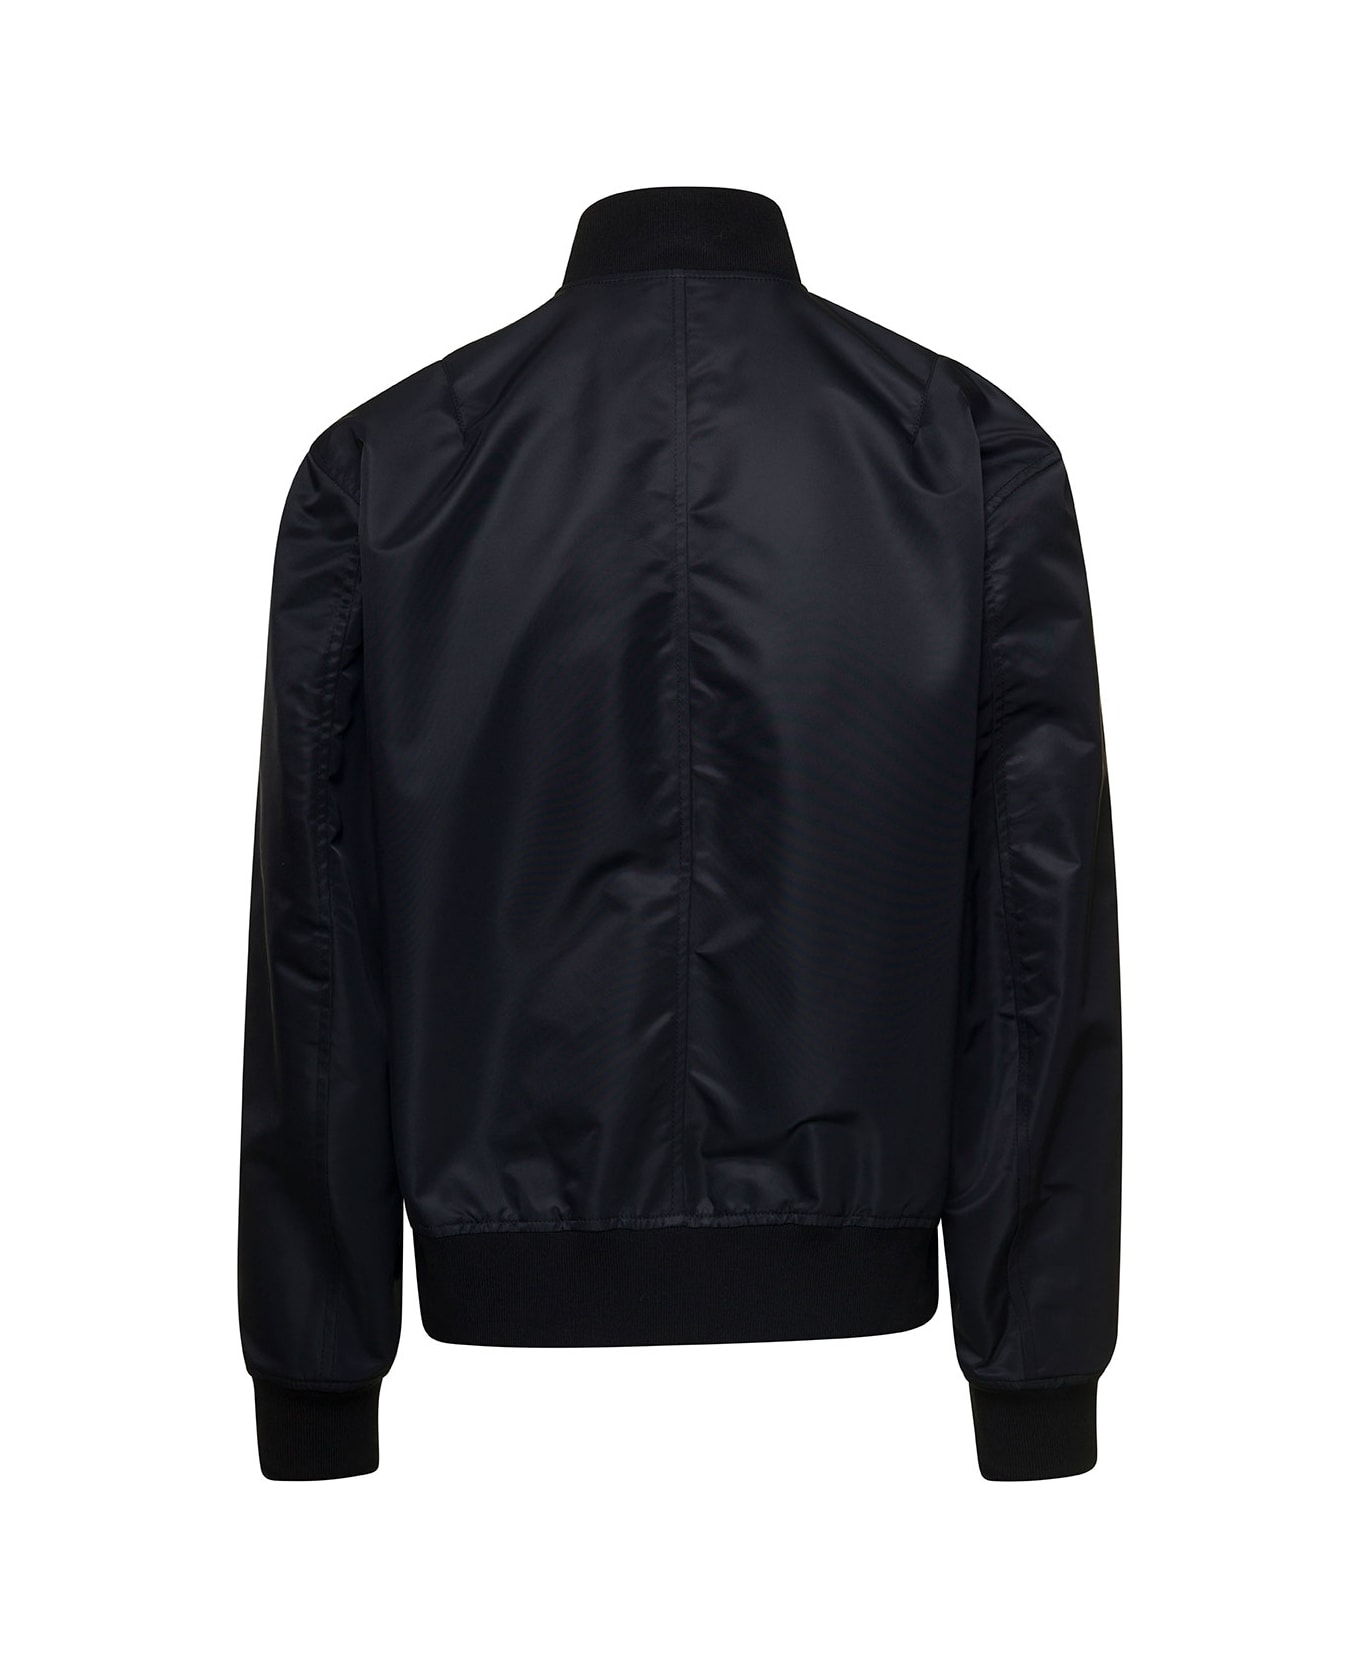 Versace Black Reversible Bomber Jacket With Barocco Print In Nylon Man - Black